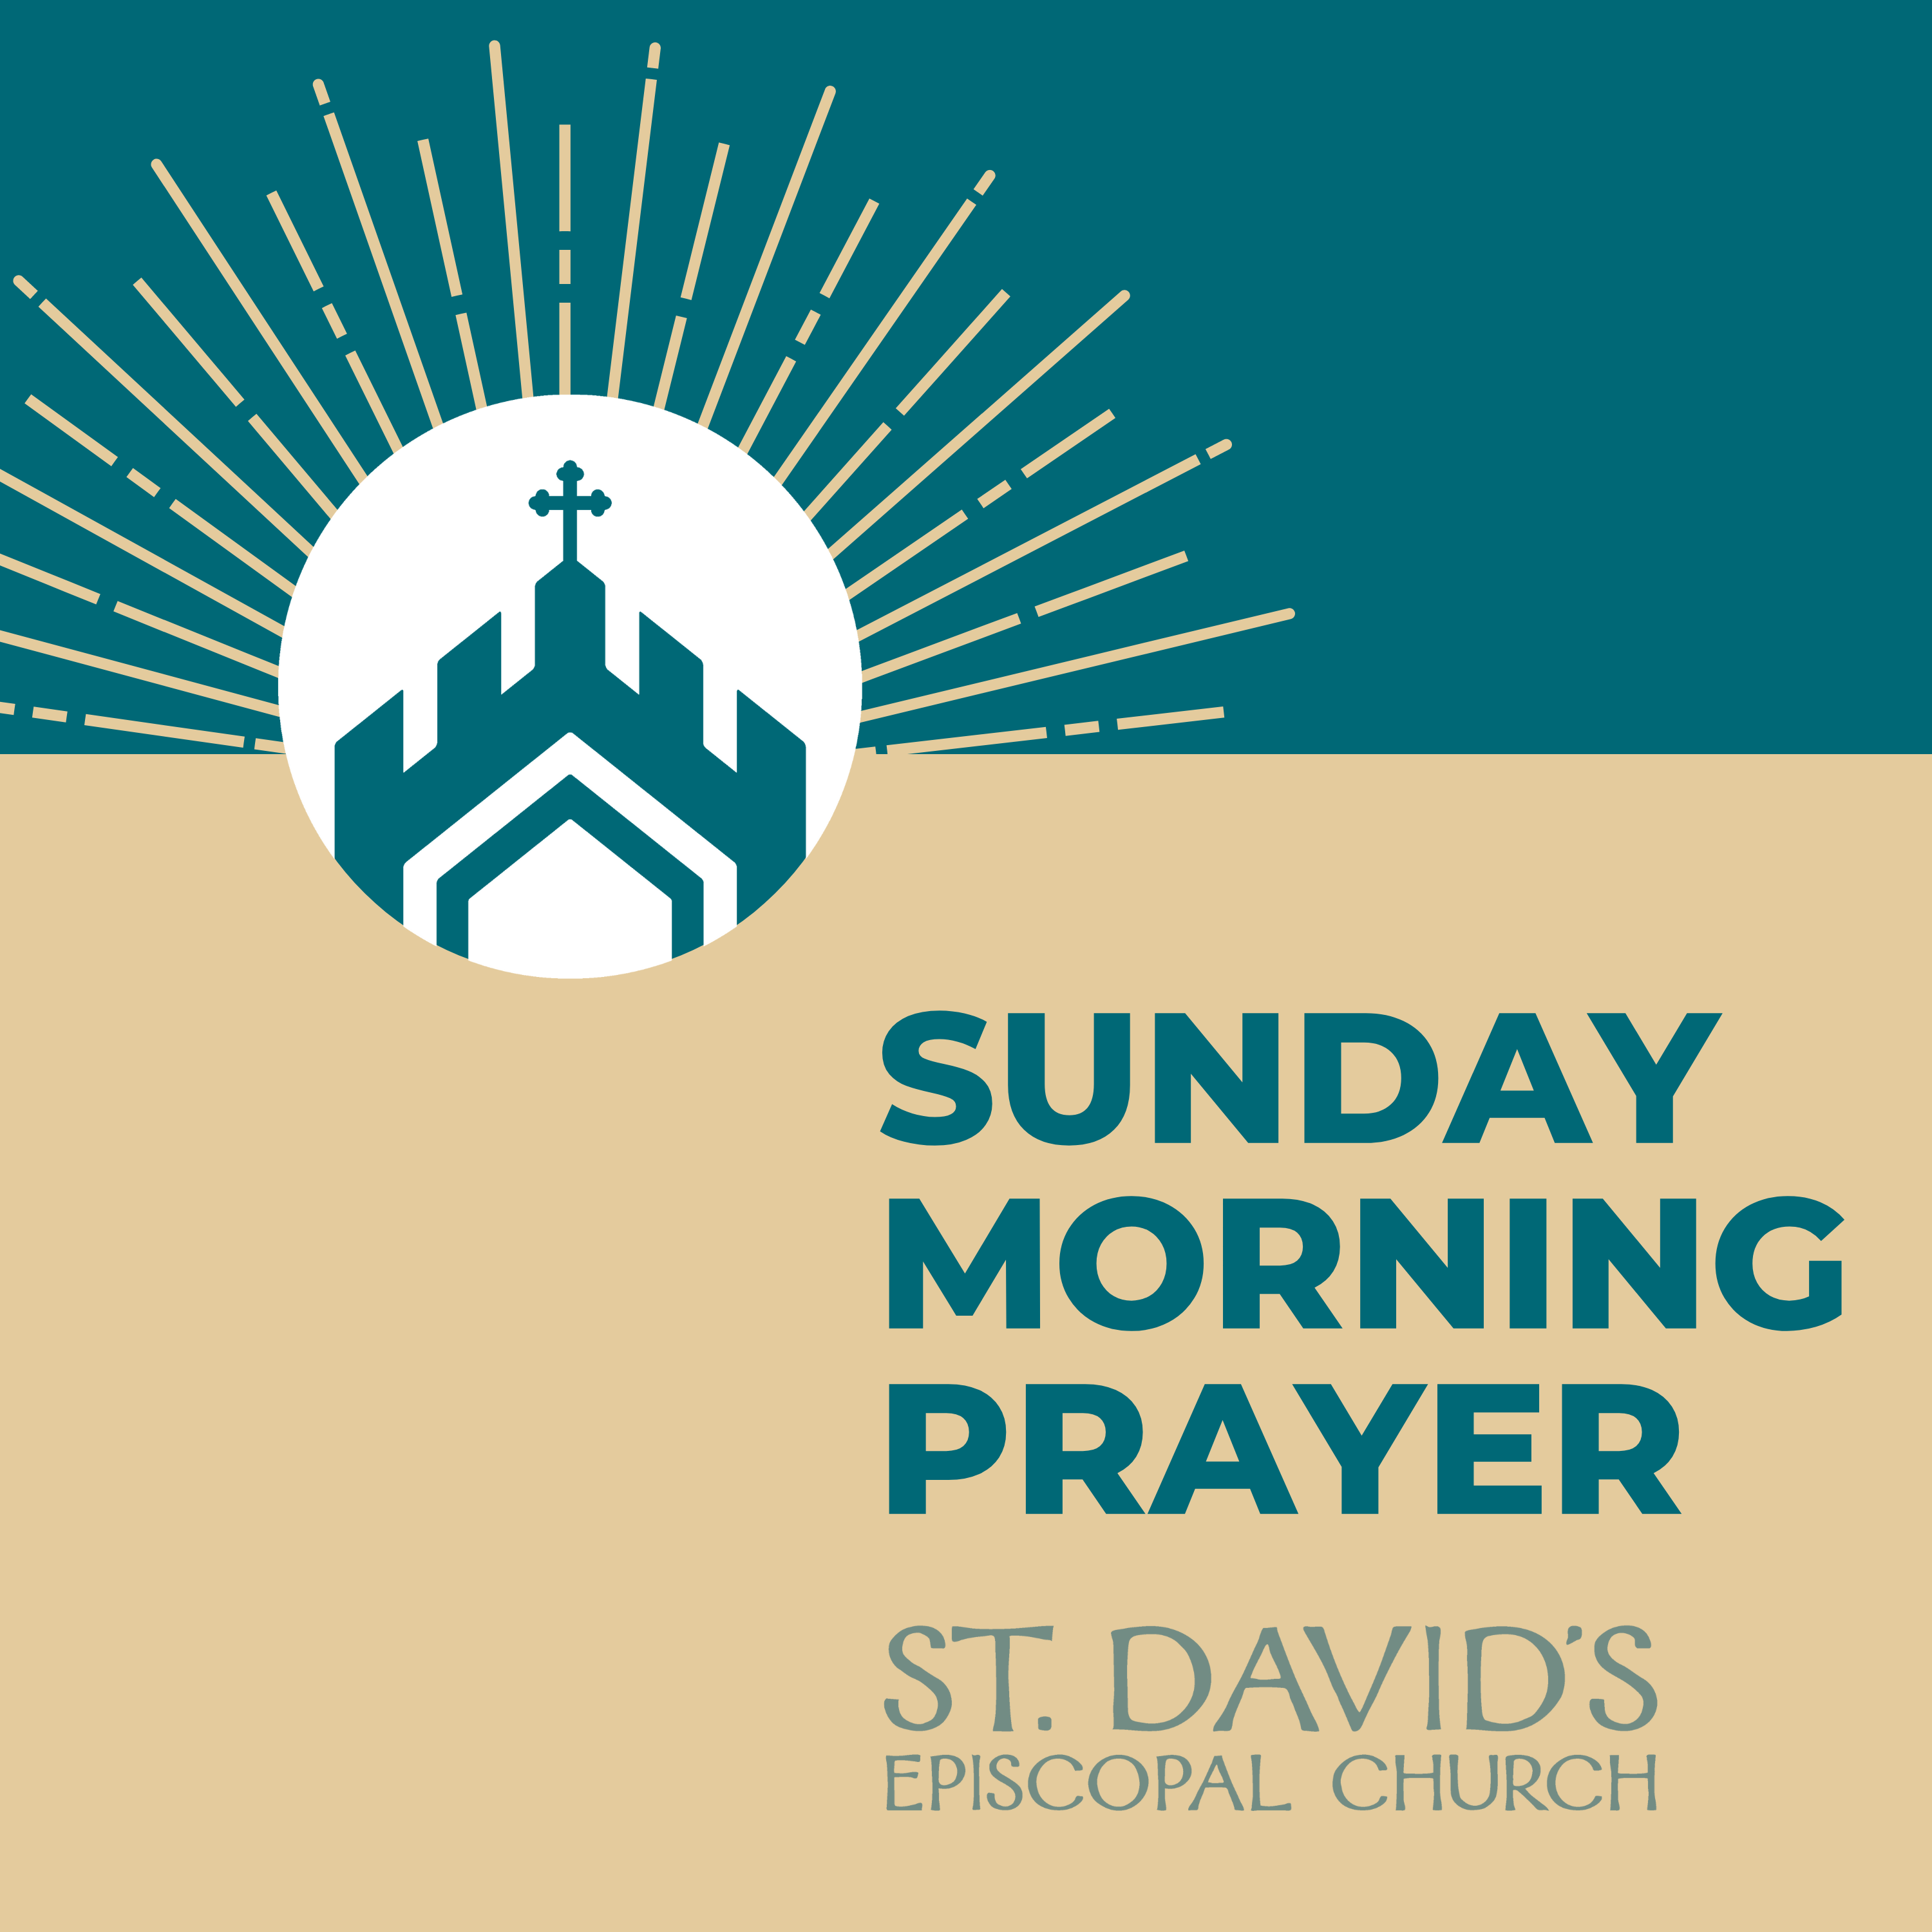 Sunday Morning Prayer: Rite Two, Year 2, 24th Sunday after Pentecost